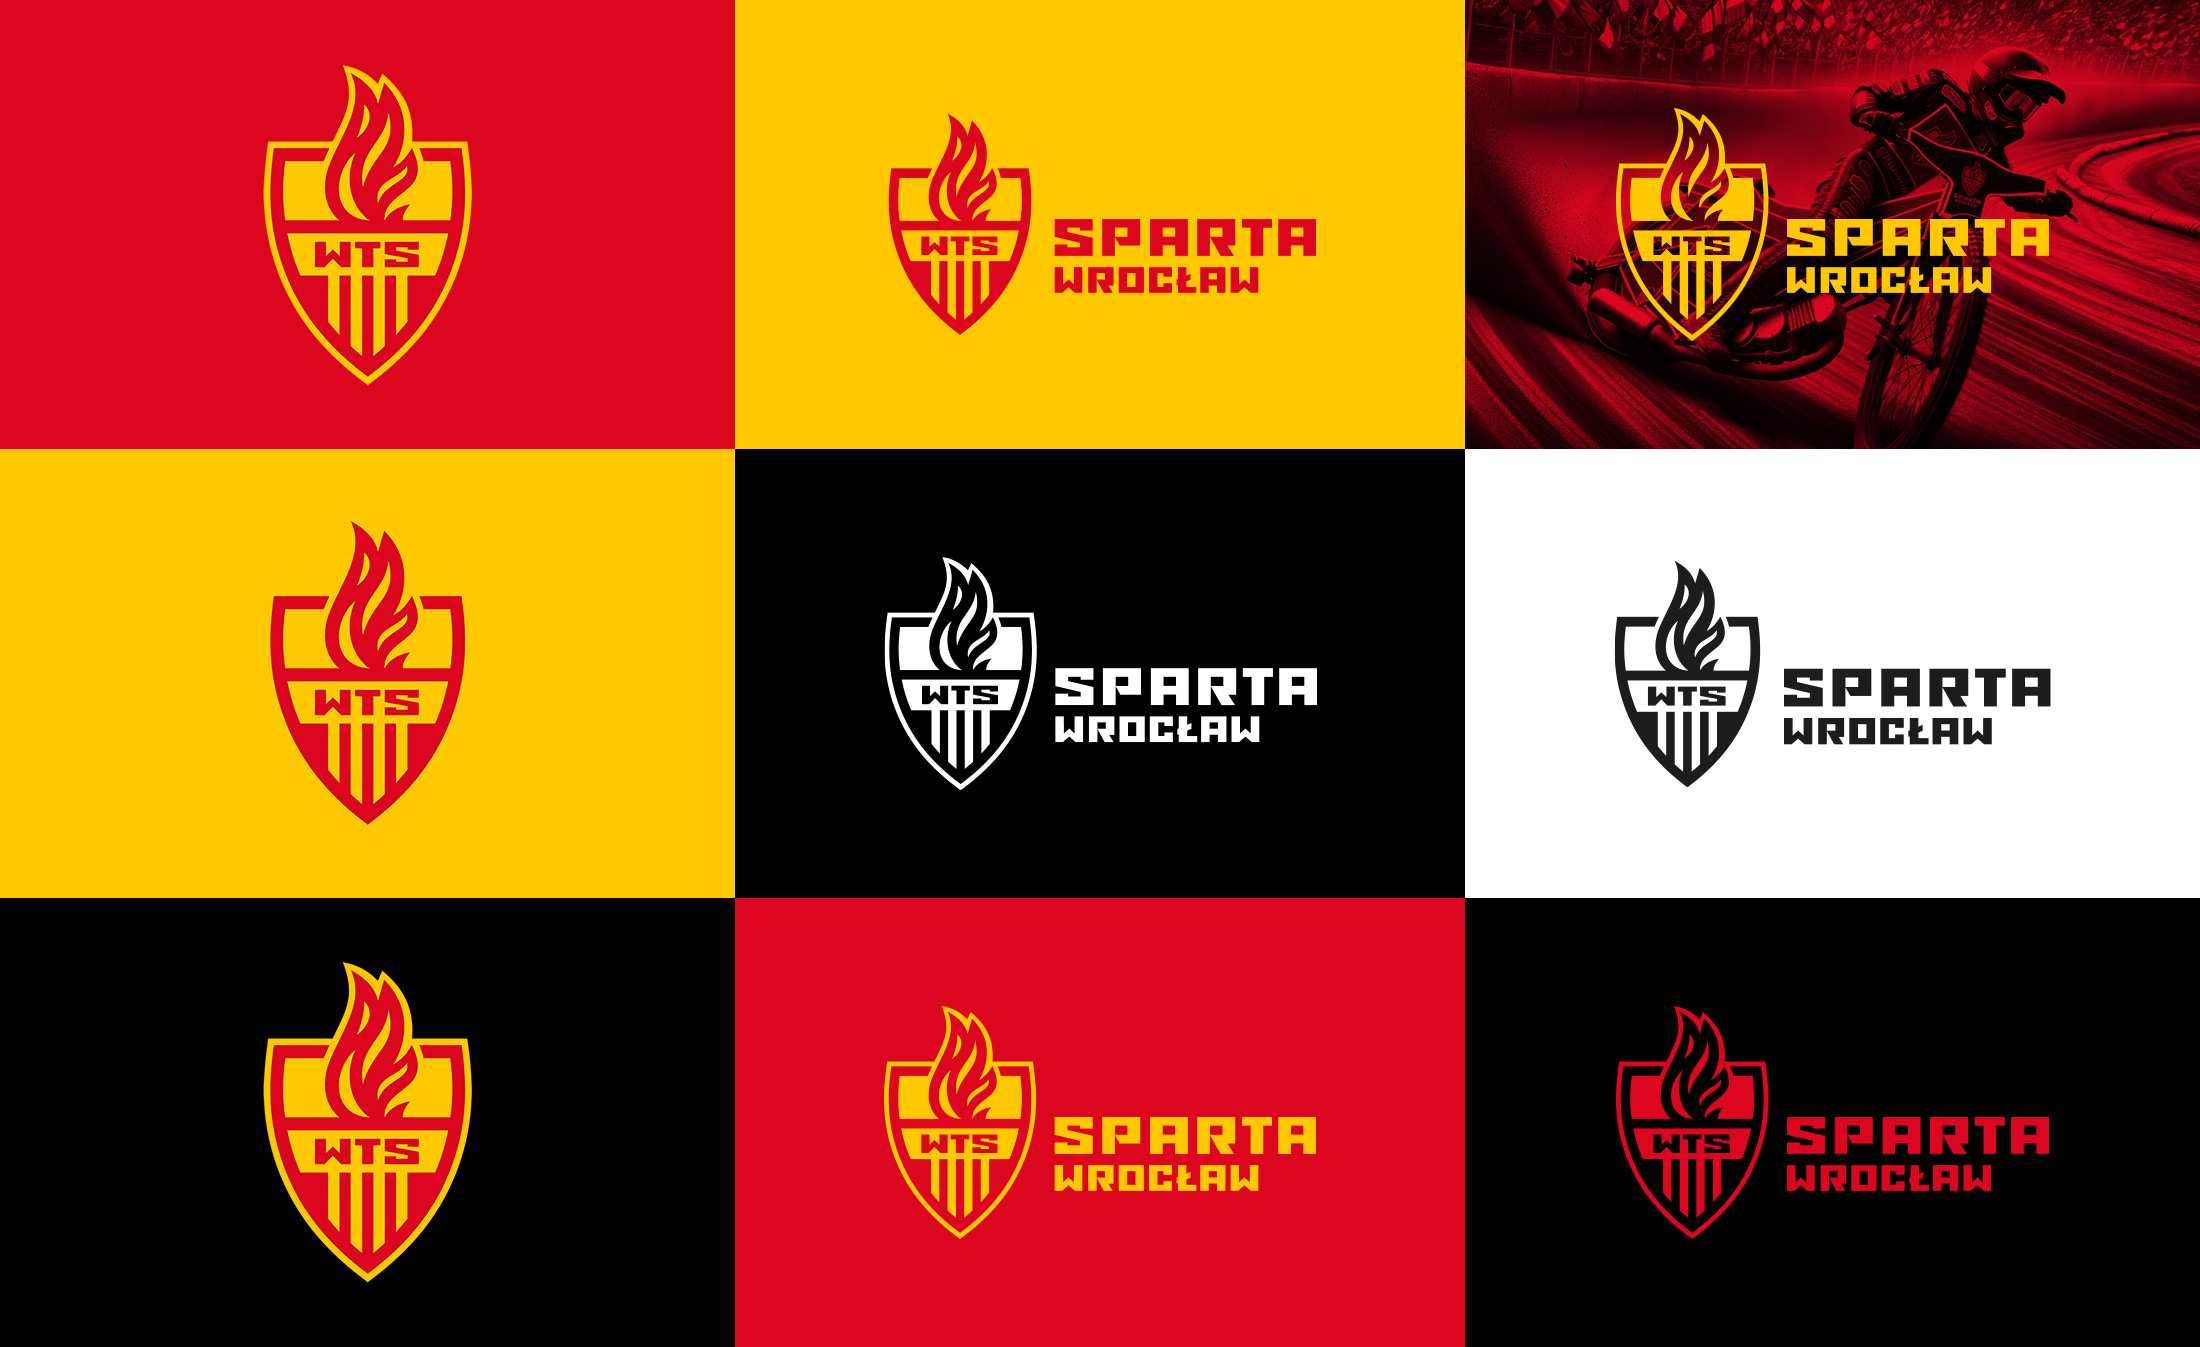 WTS Sparta Wrocław rebranding design Kuba Malicki